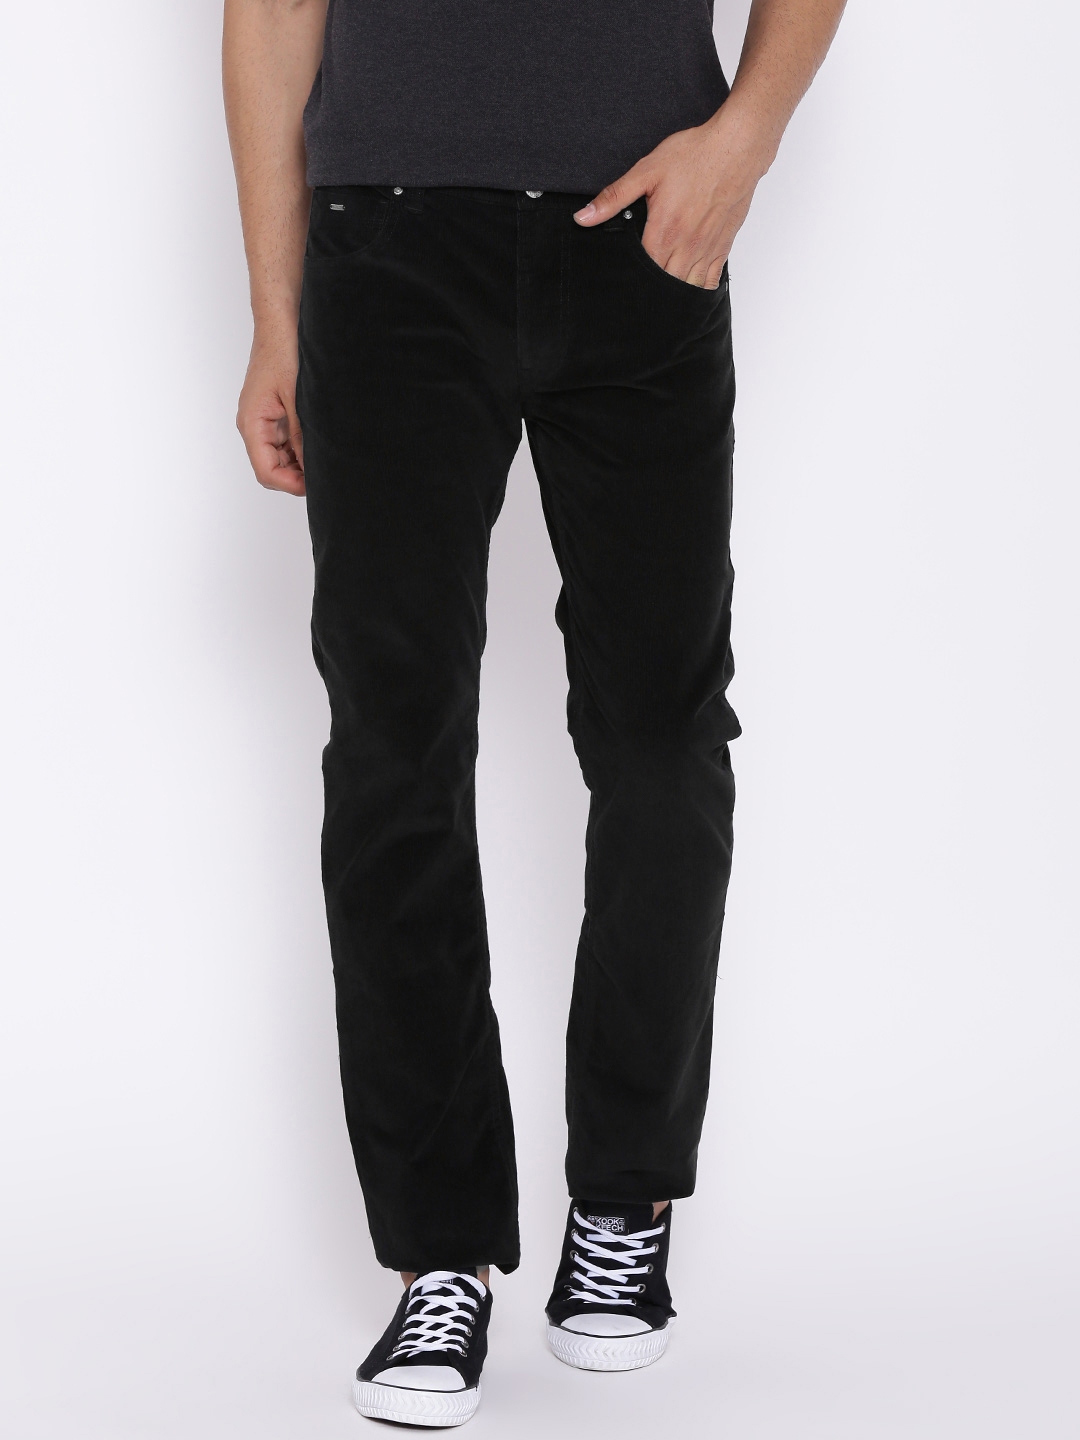 Buy Lee Mens Slim Jeans LMTR002360Khaki at Amazonin